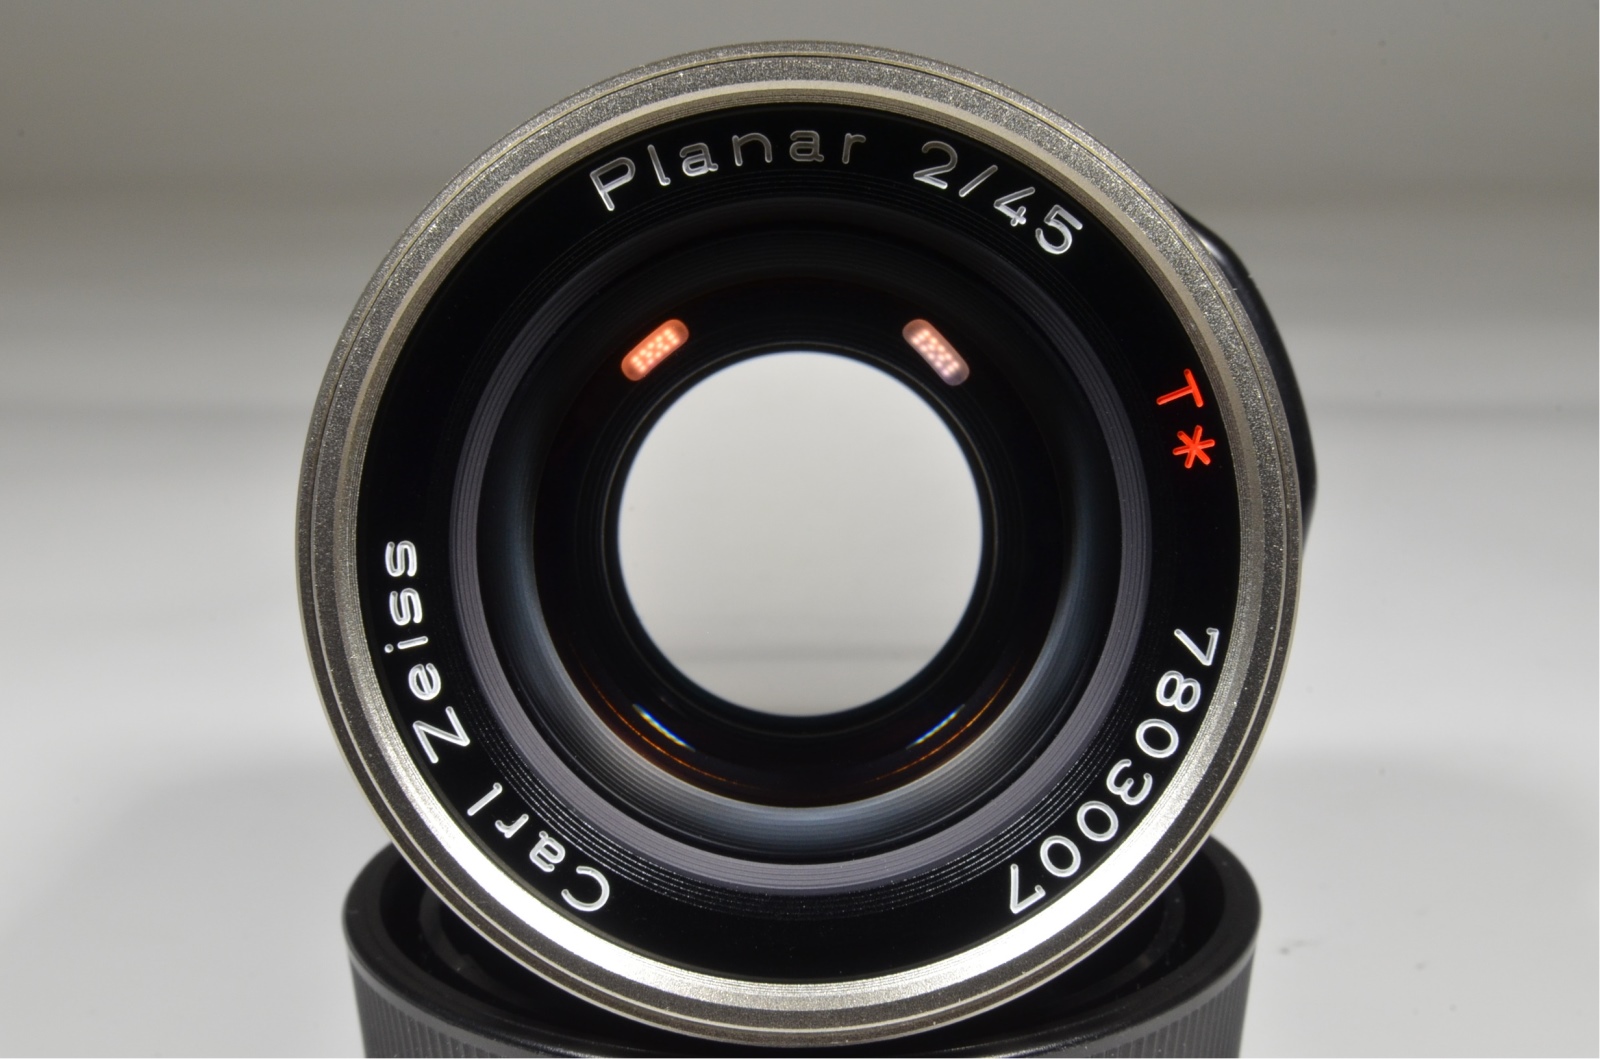 contax g2 camera / planar 45mm f2 / biogon 28mm f2.8 / sonnar 90mm f2.8 / tla200